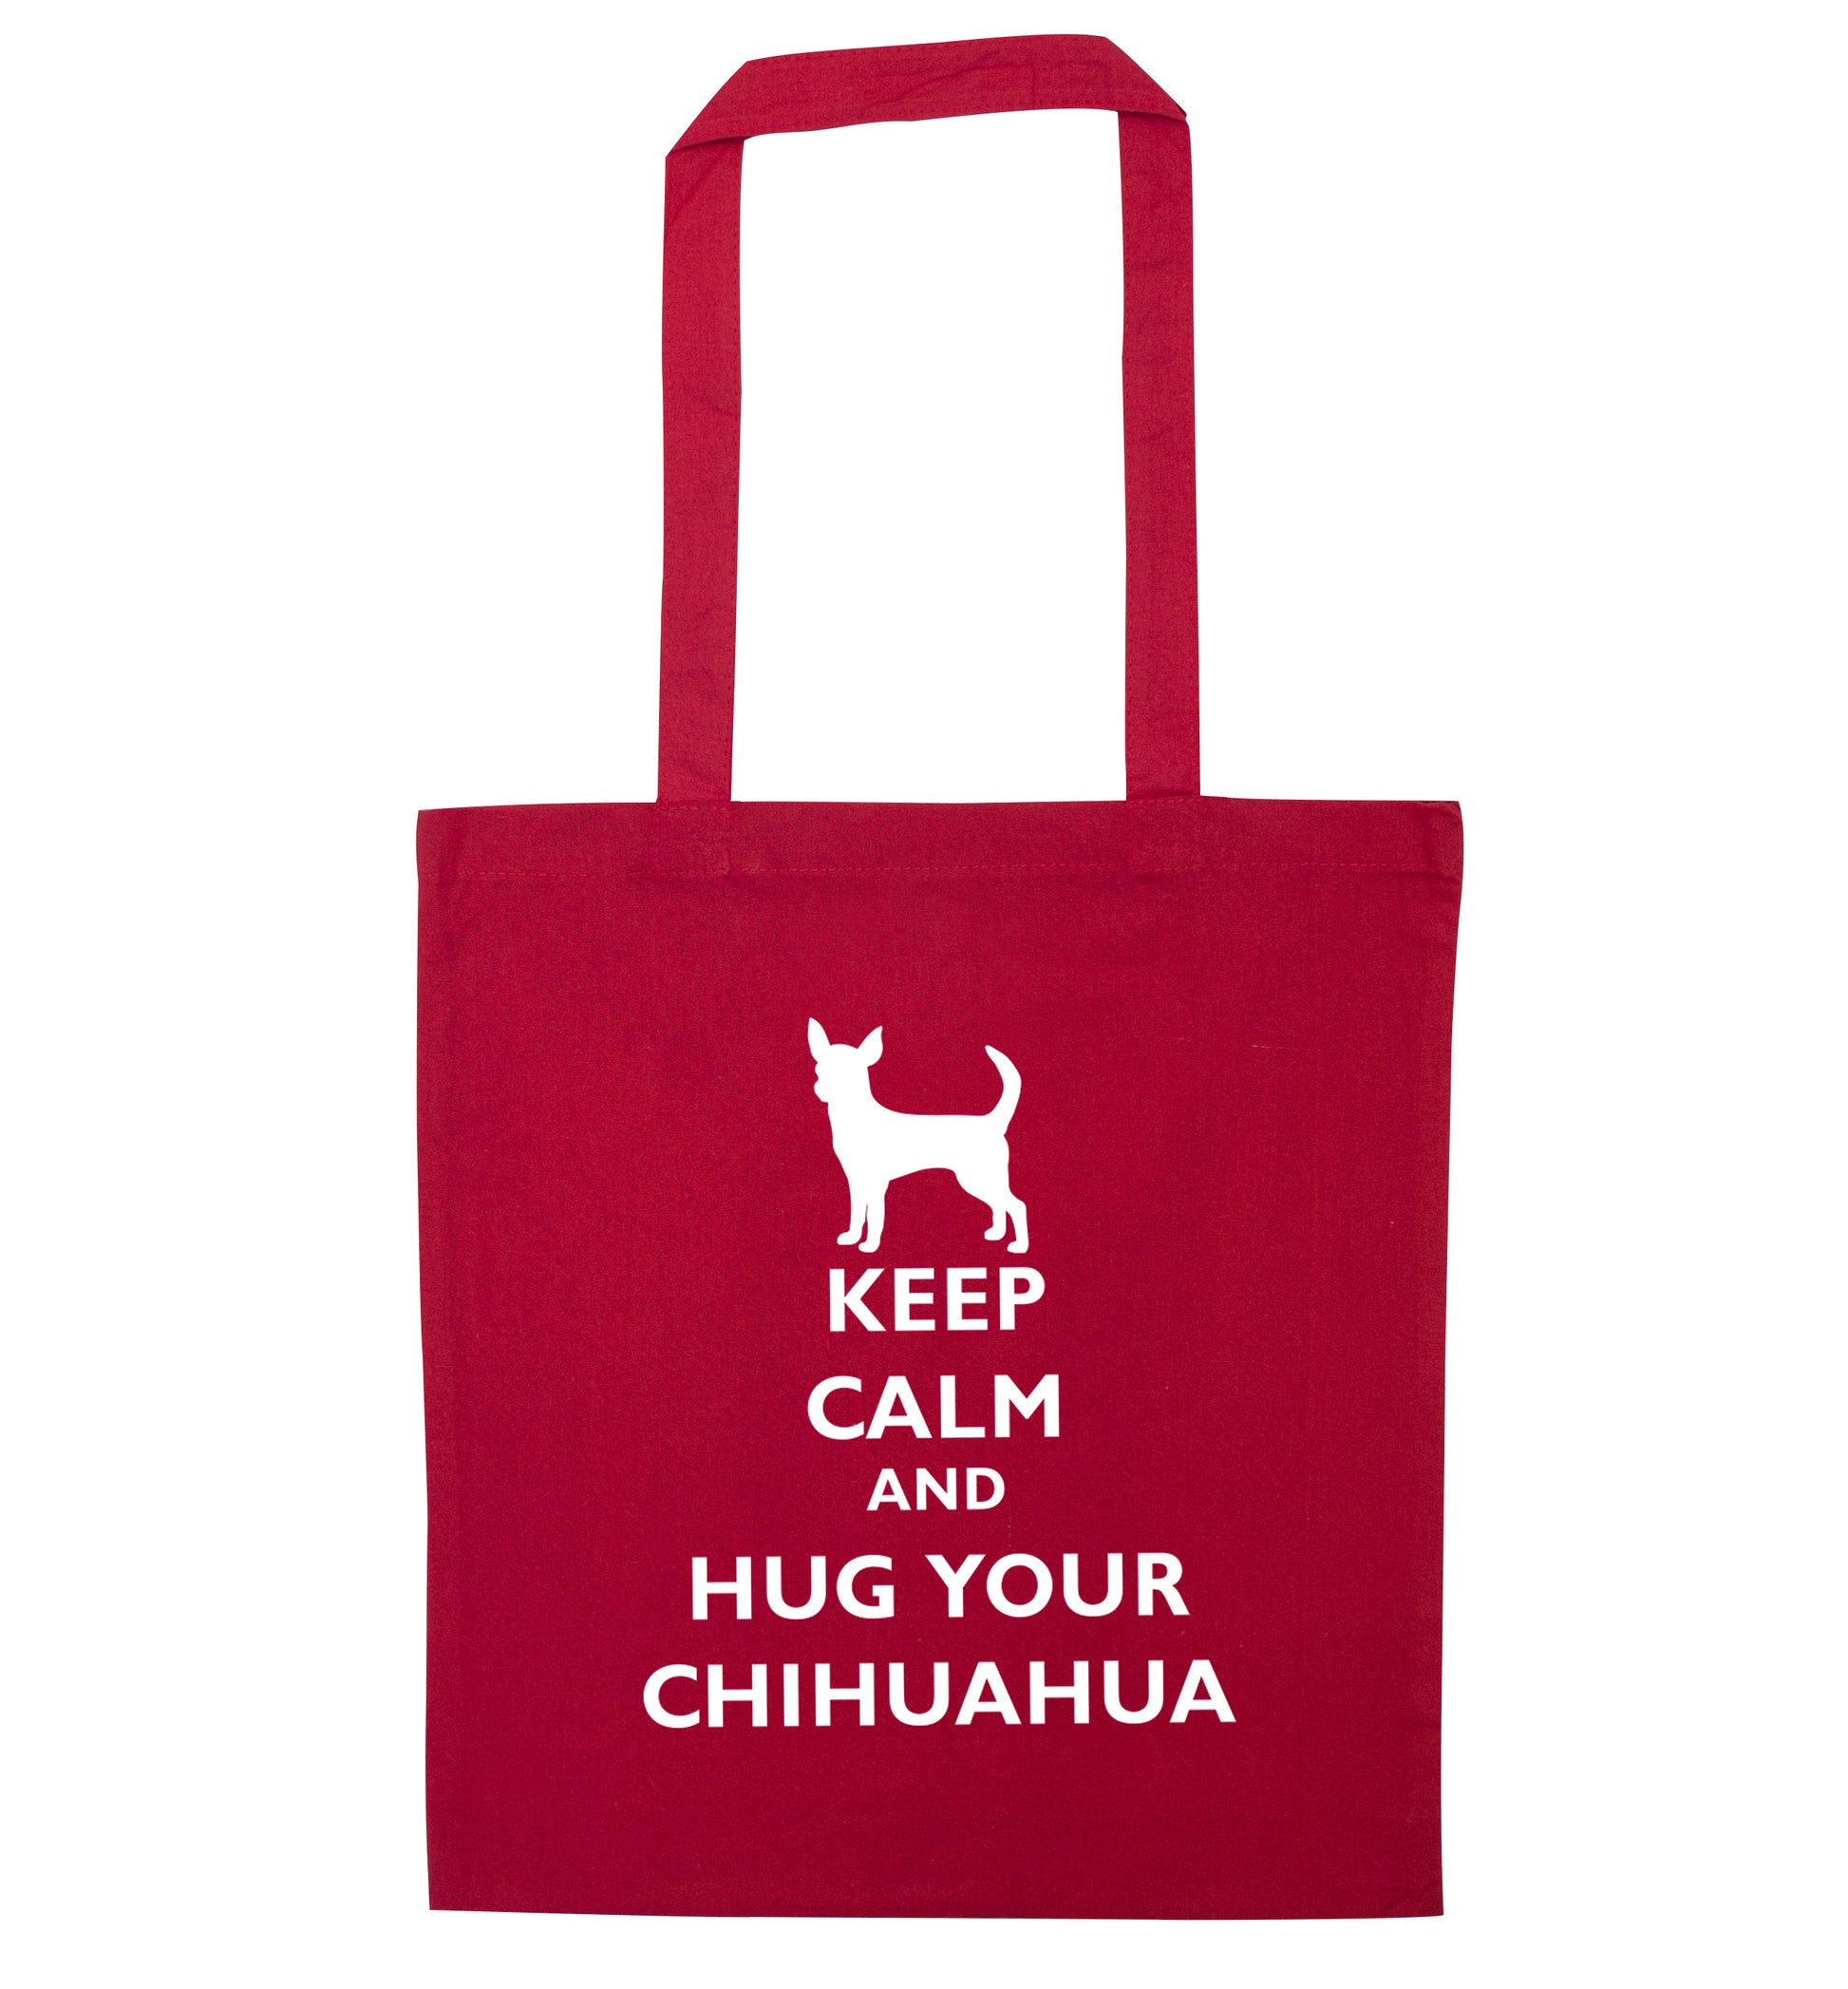 Keep calm and hug your chihuahua red tote bag